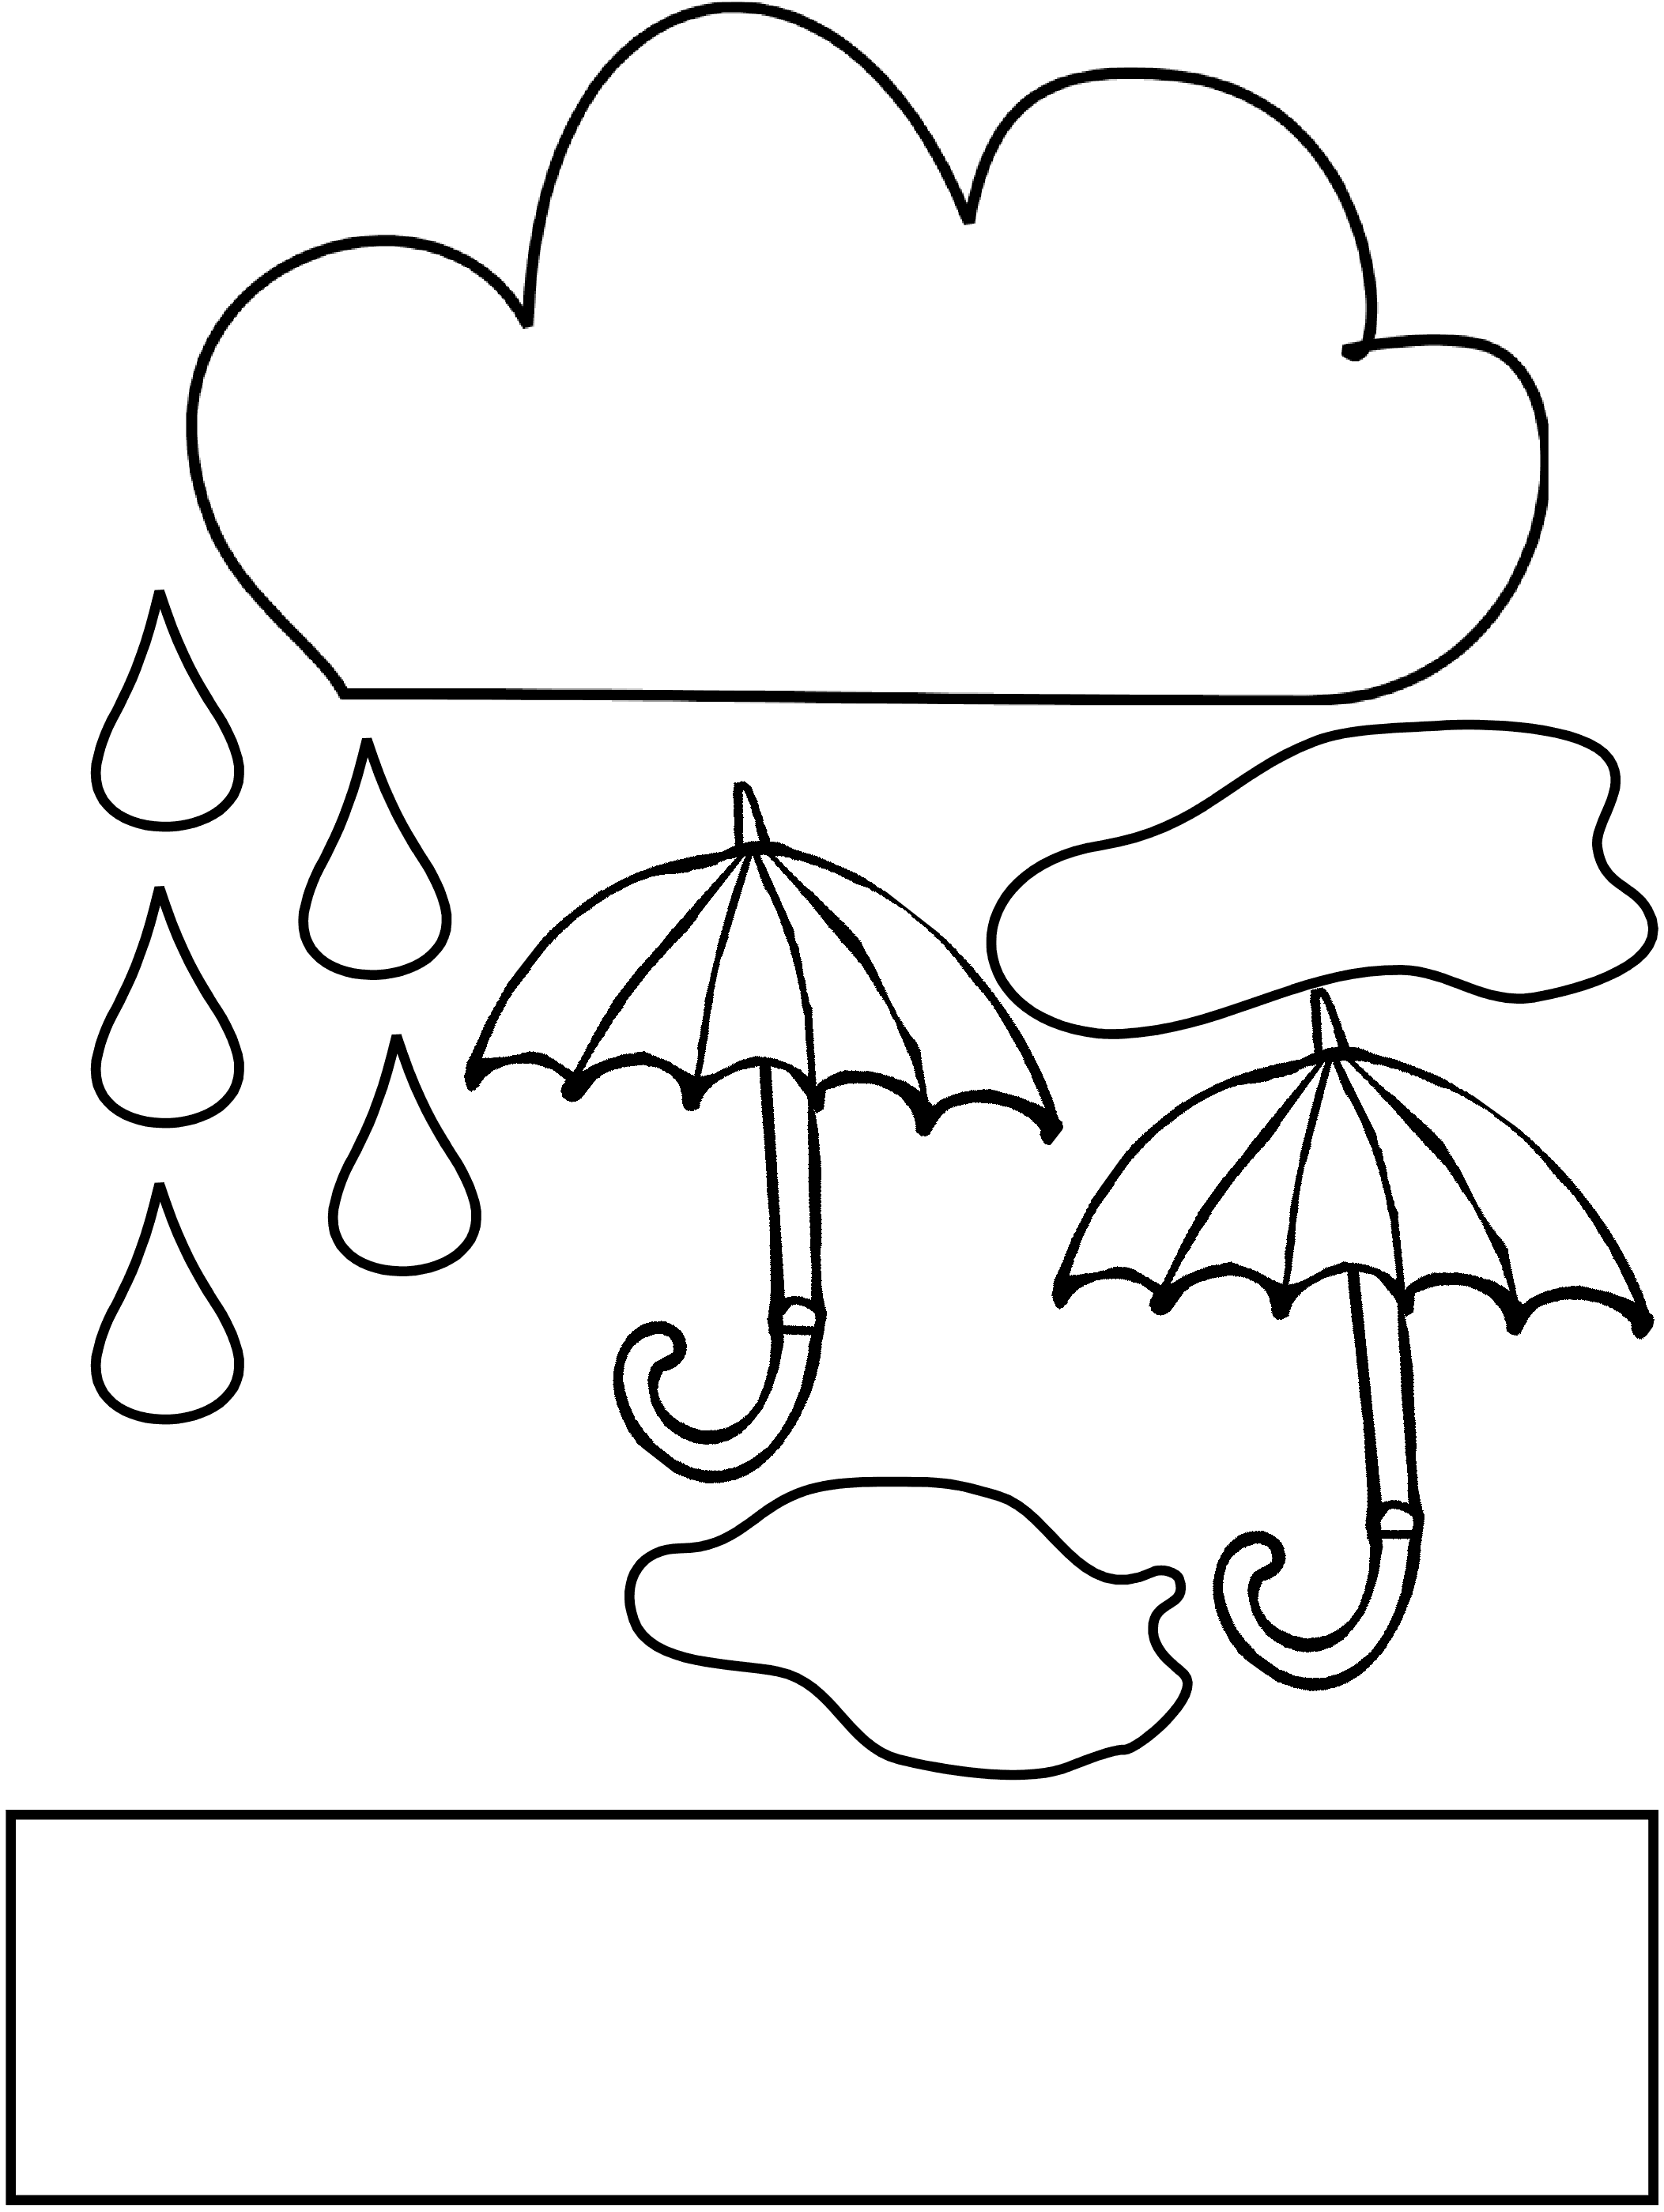 Coloring Page - Printable Raindrops